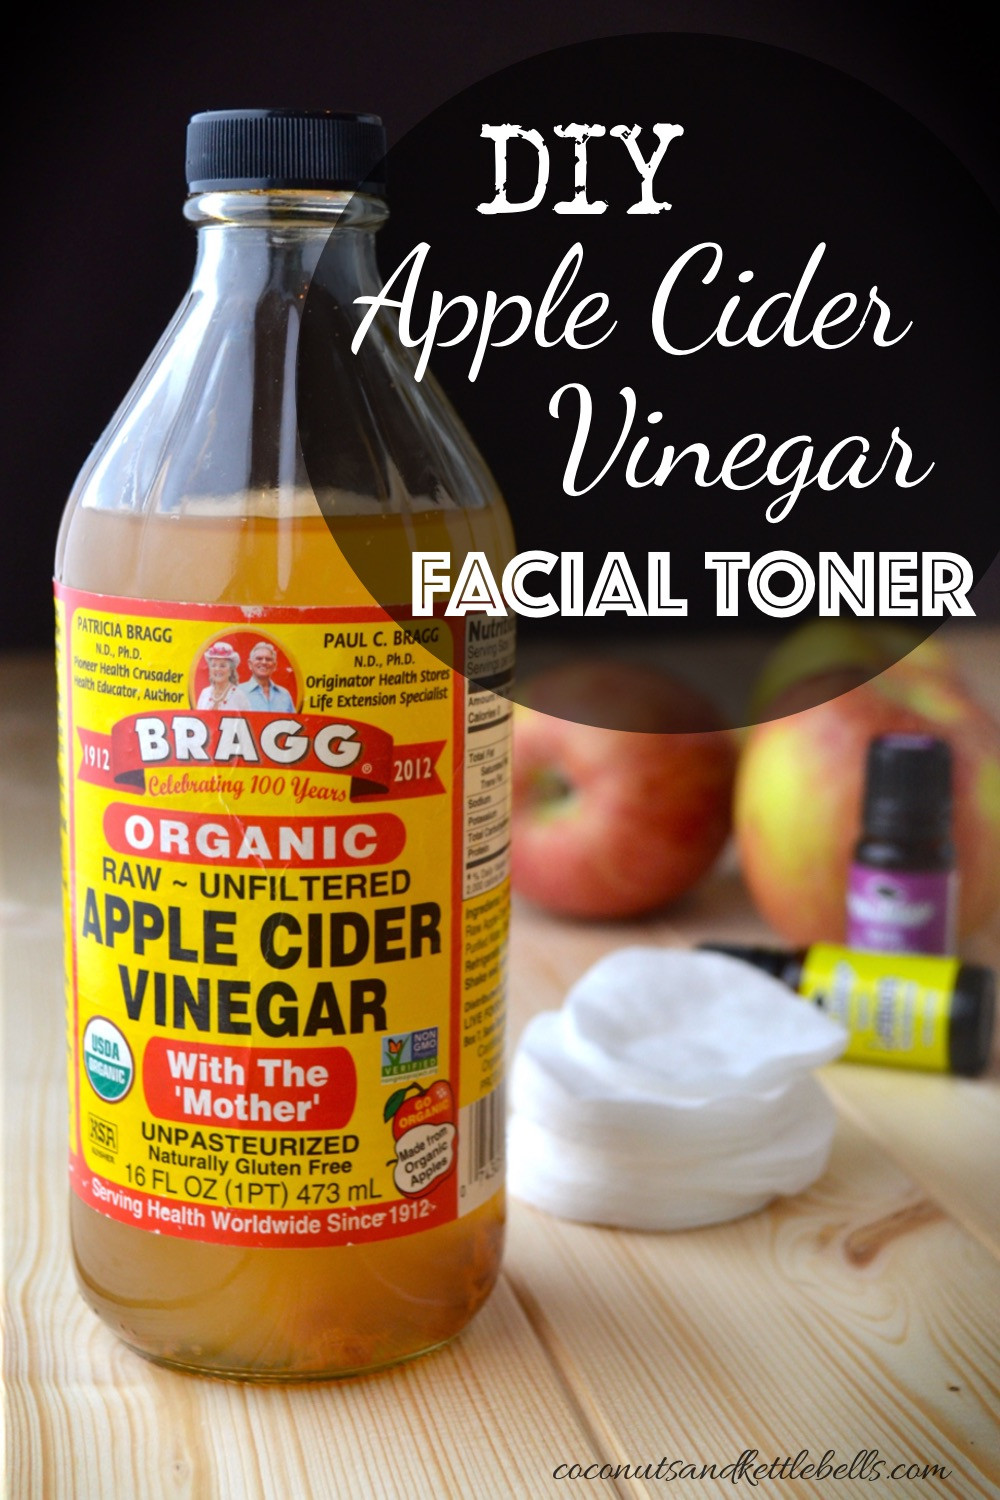 Best ideas about DIY Apple Cider Vinegar
. Save or Pin DIY Apple Cider Vinegar Facial Toner Coconuts & Kettlebells Now.